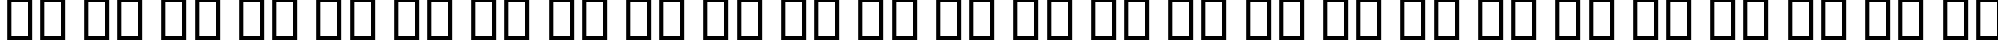 Пример написания английского алфавита шрифтом B Mashhad Bold